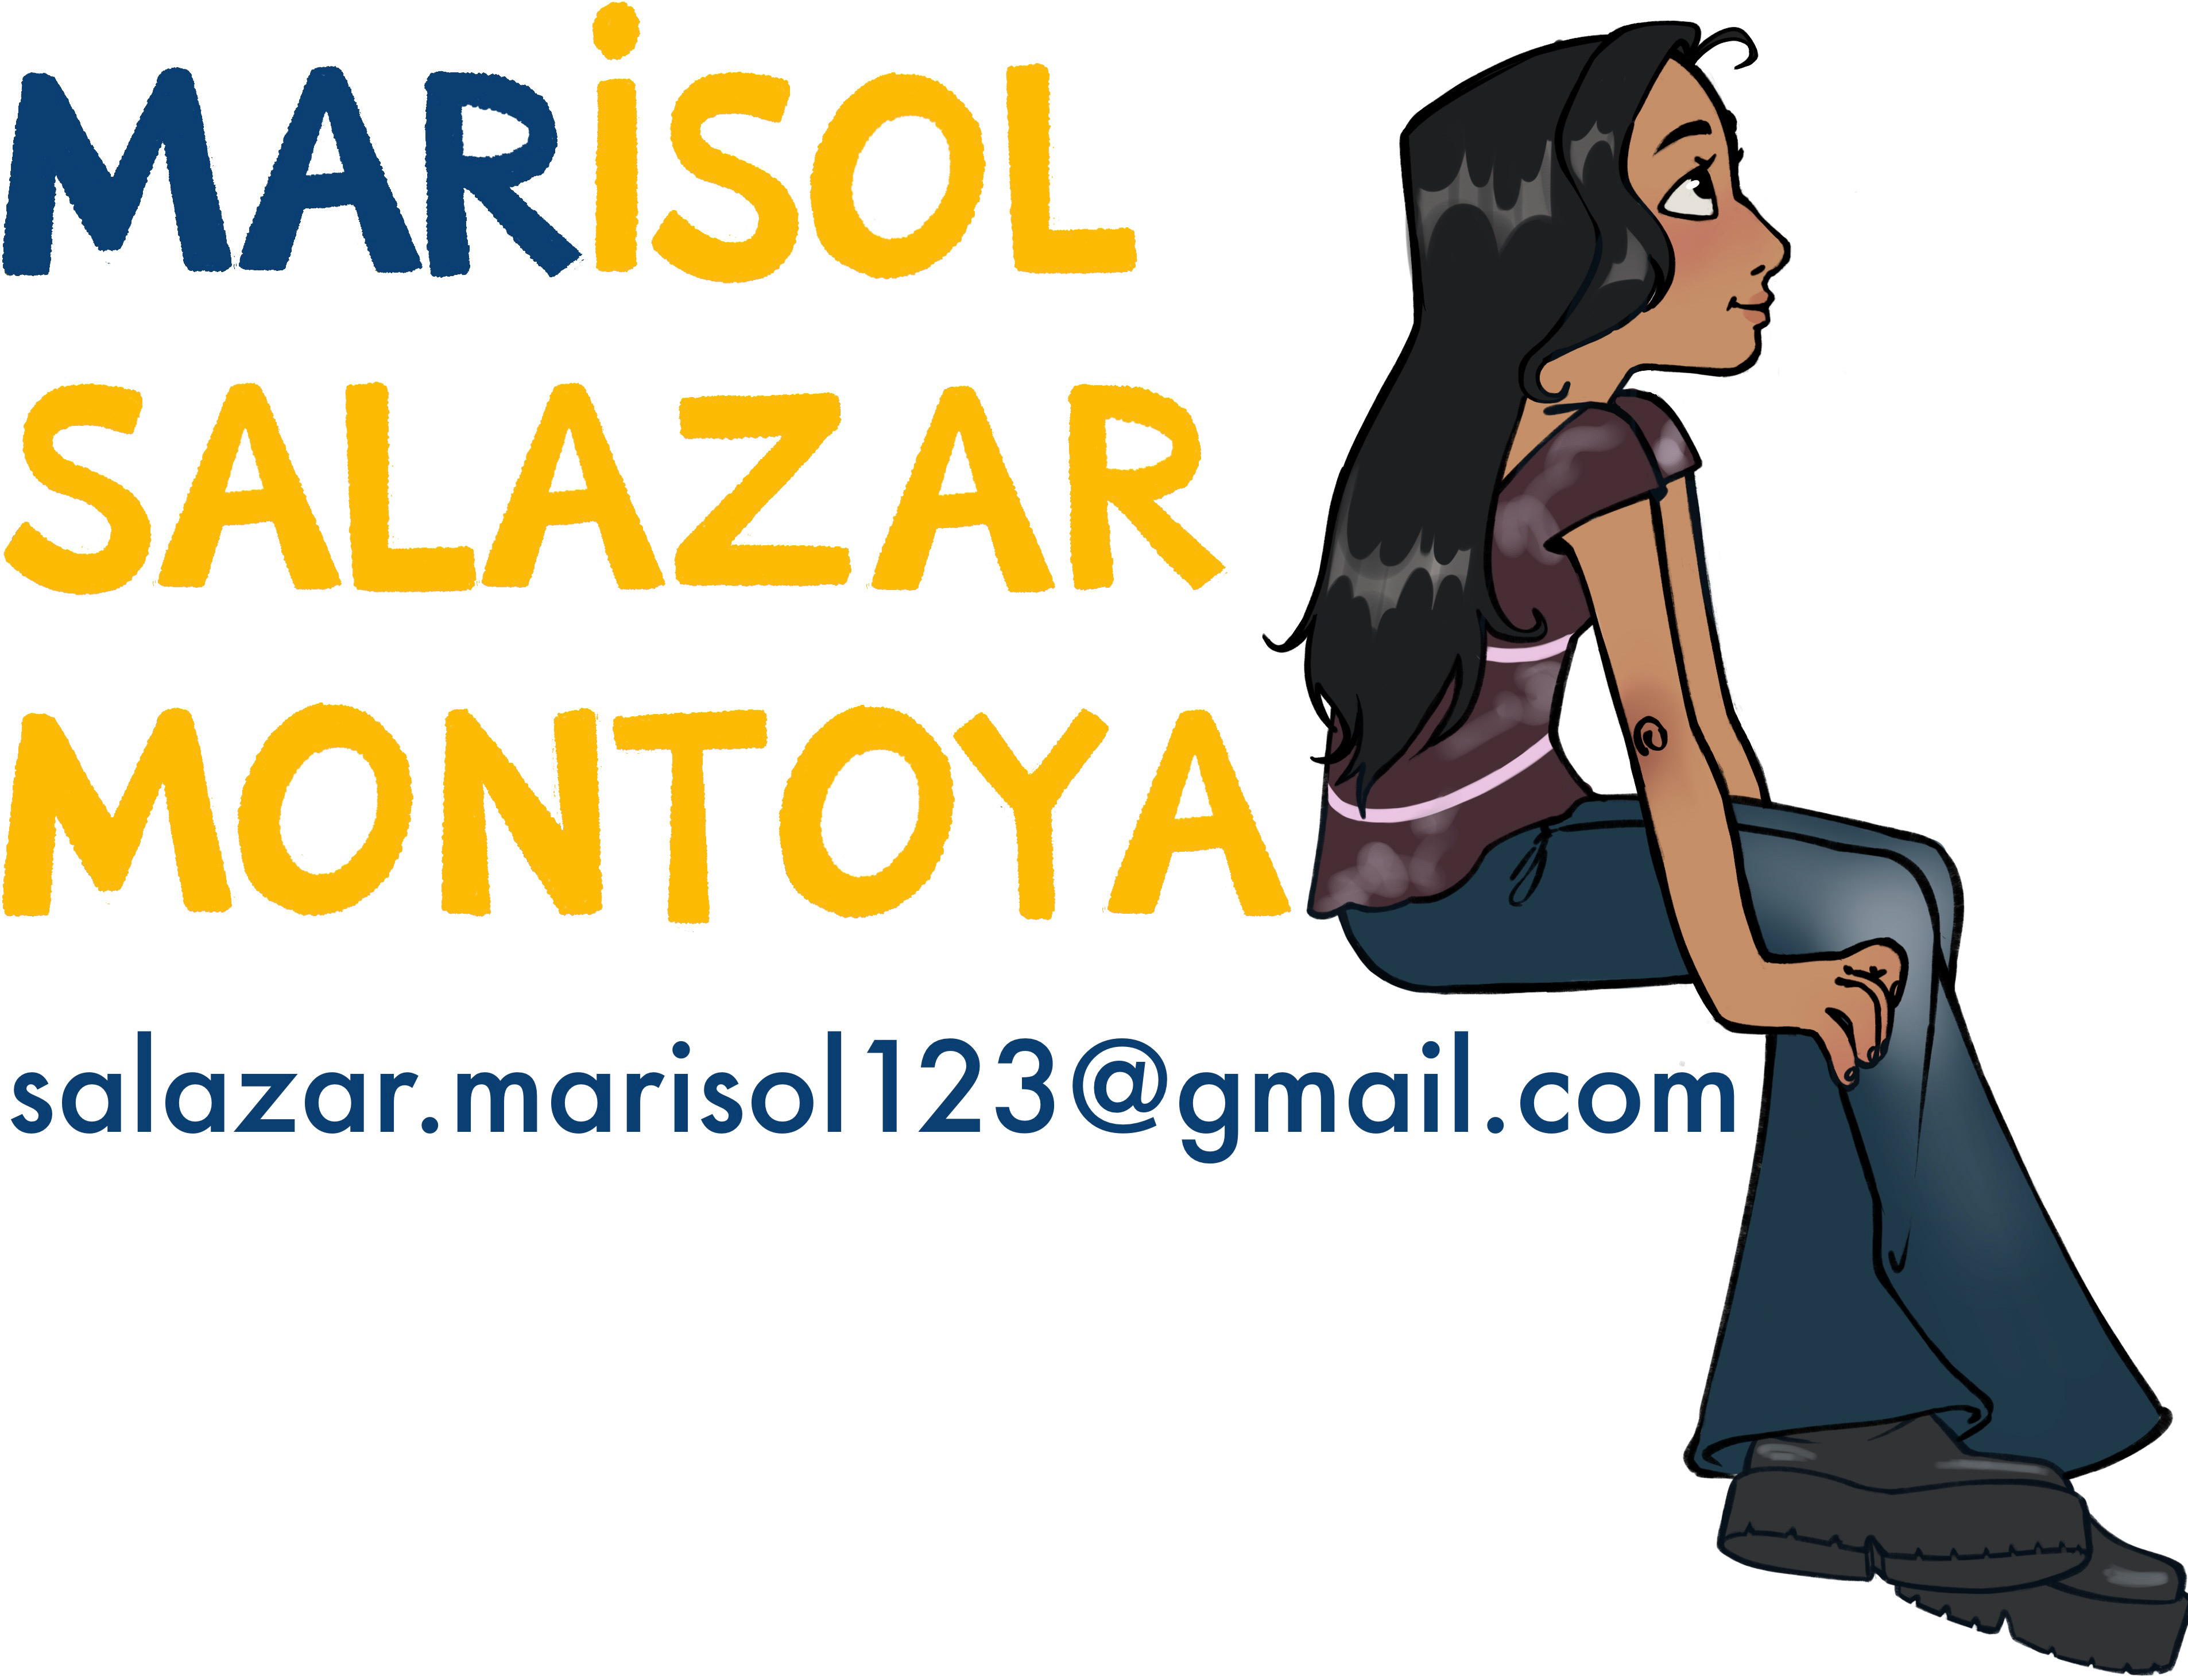 Marisol Salazar Montoya